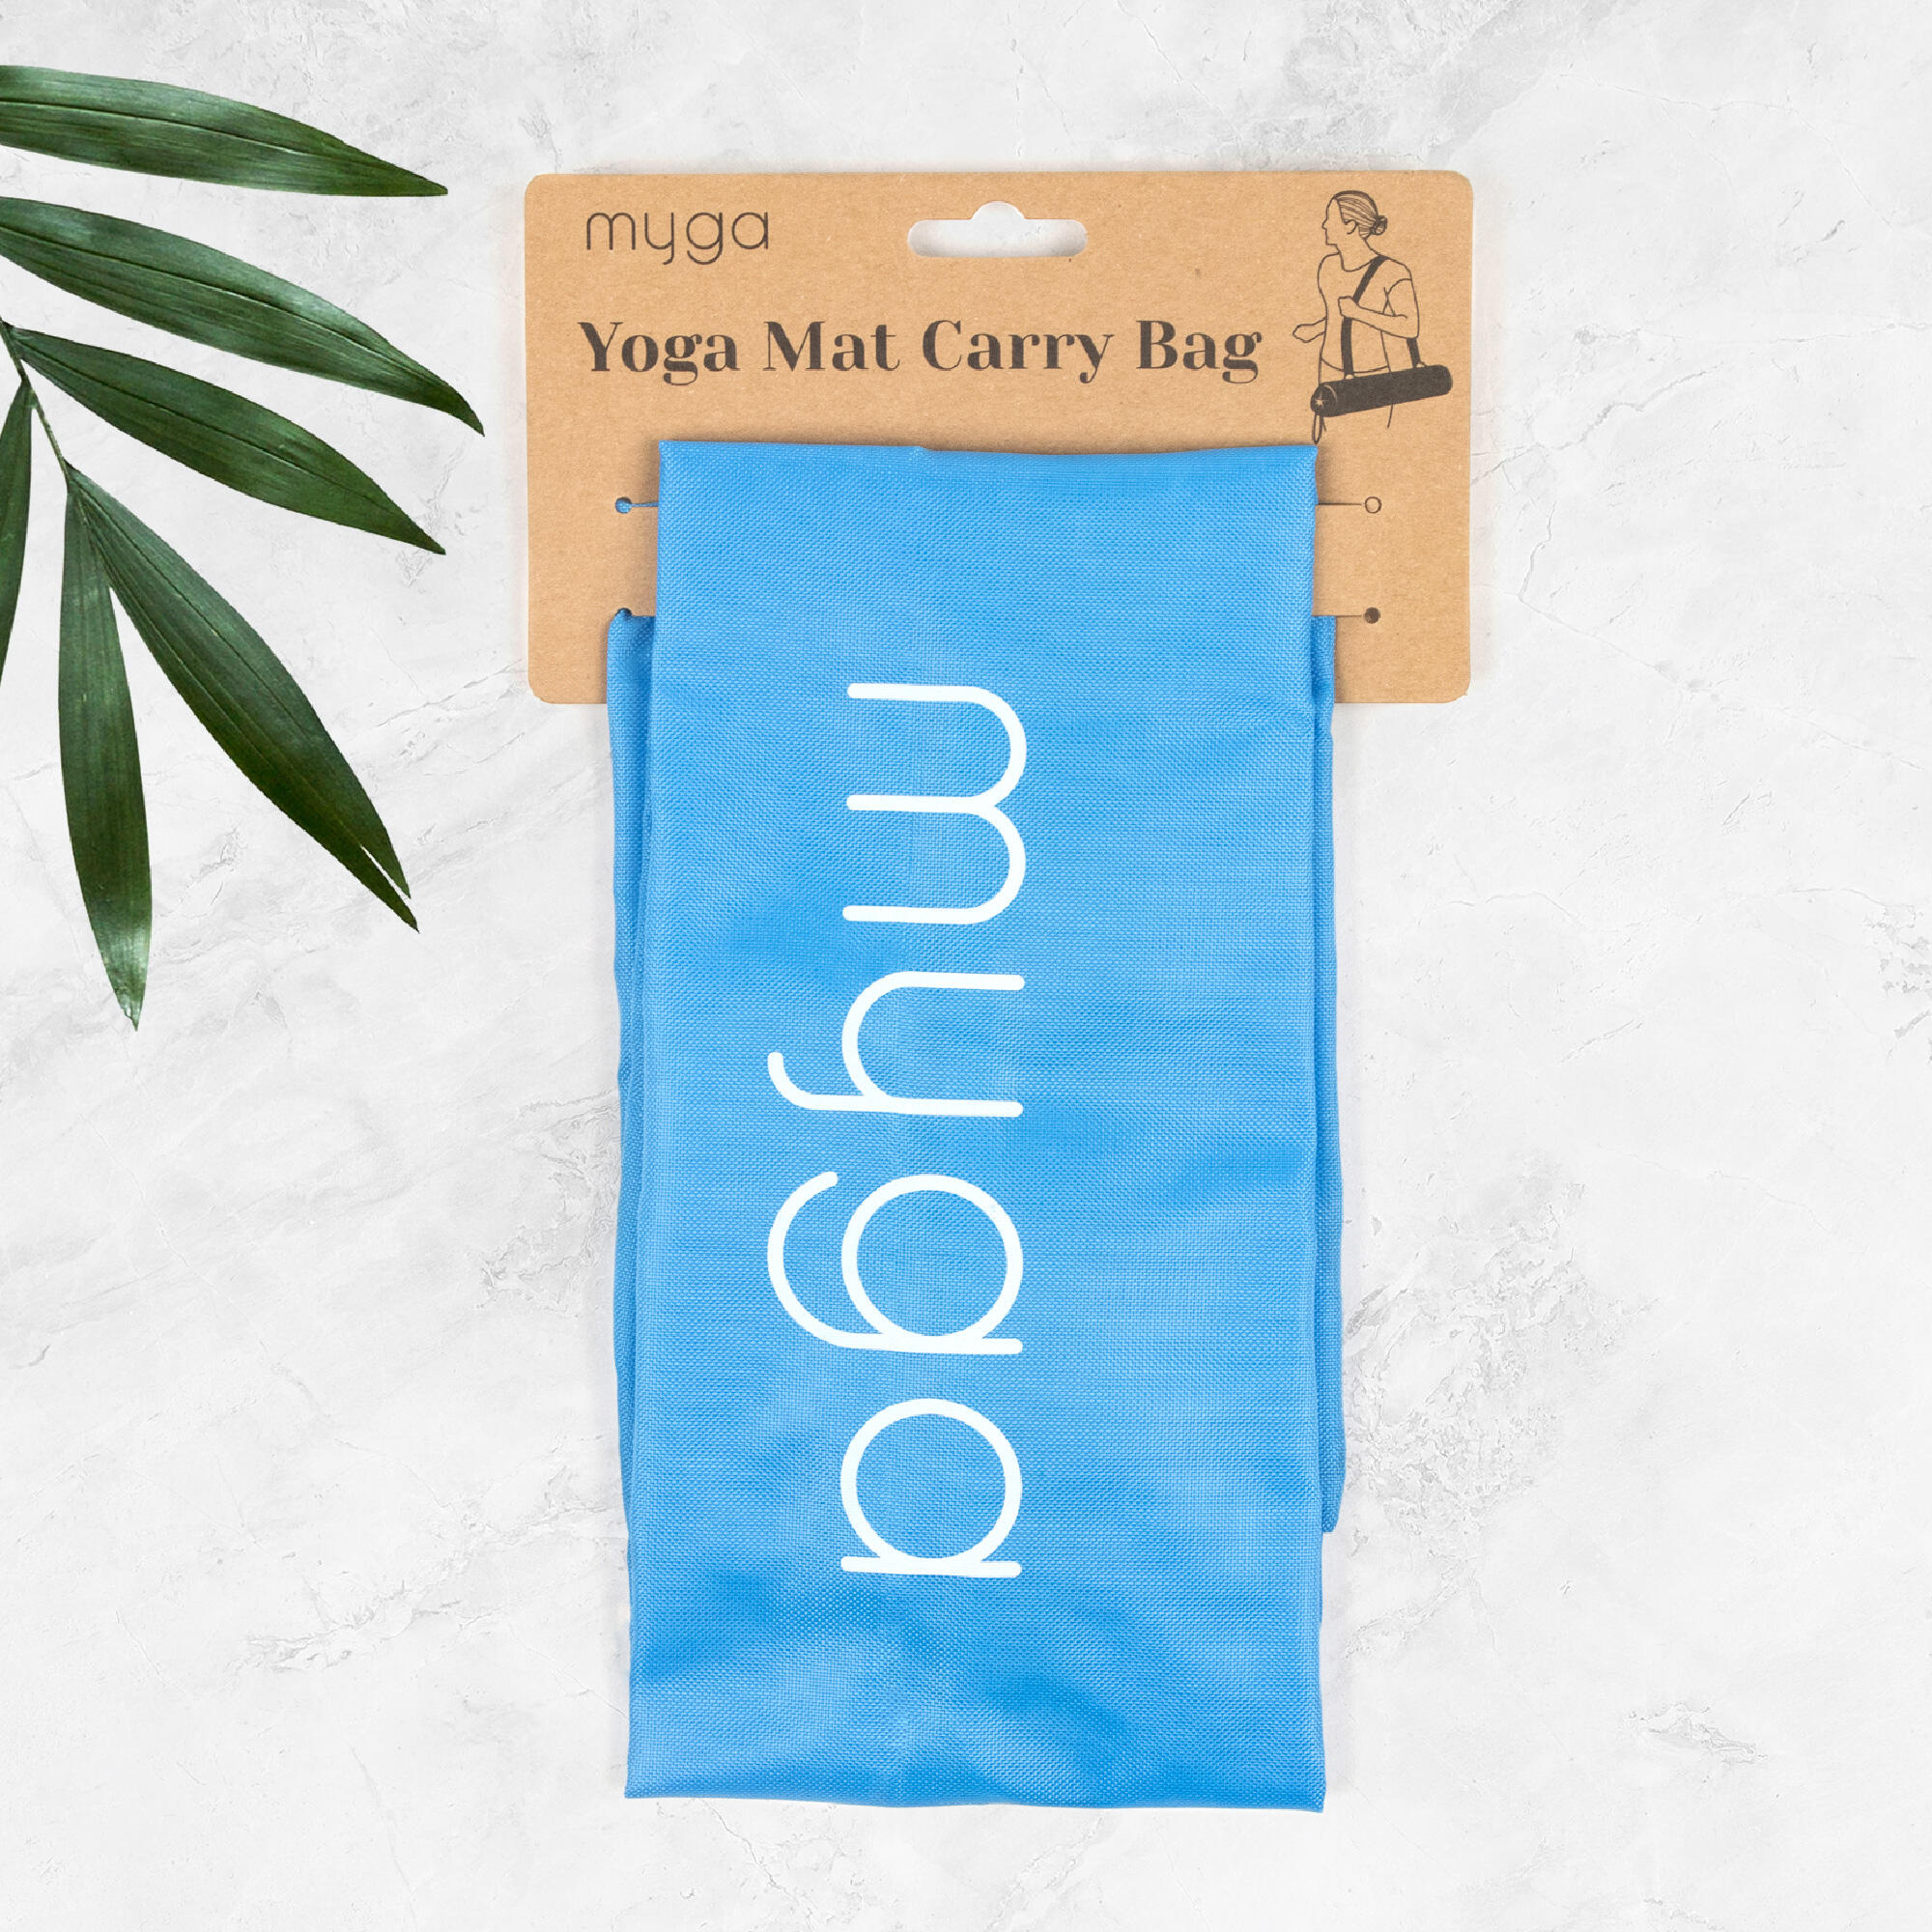 Myga Yoga Mat Carry Bag - Pink MYGA - Decathlon